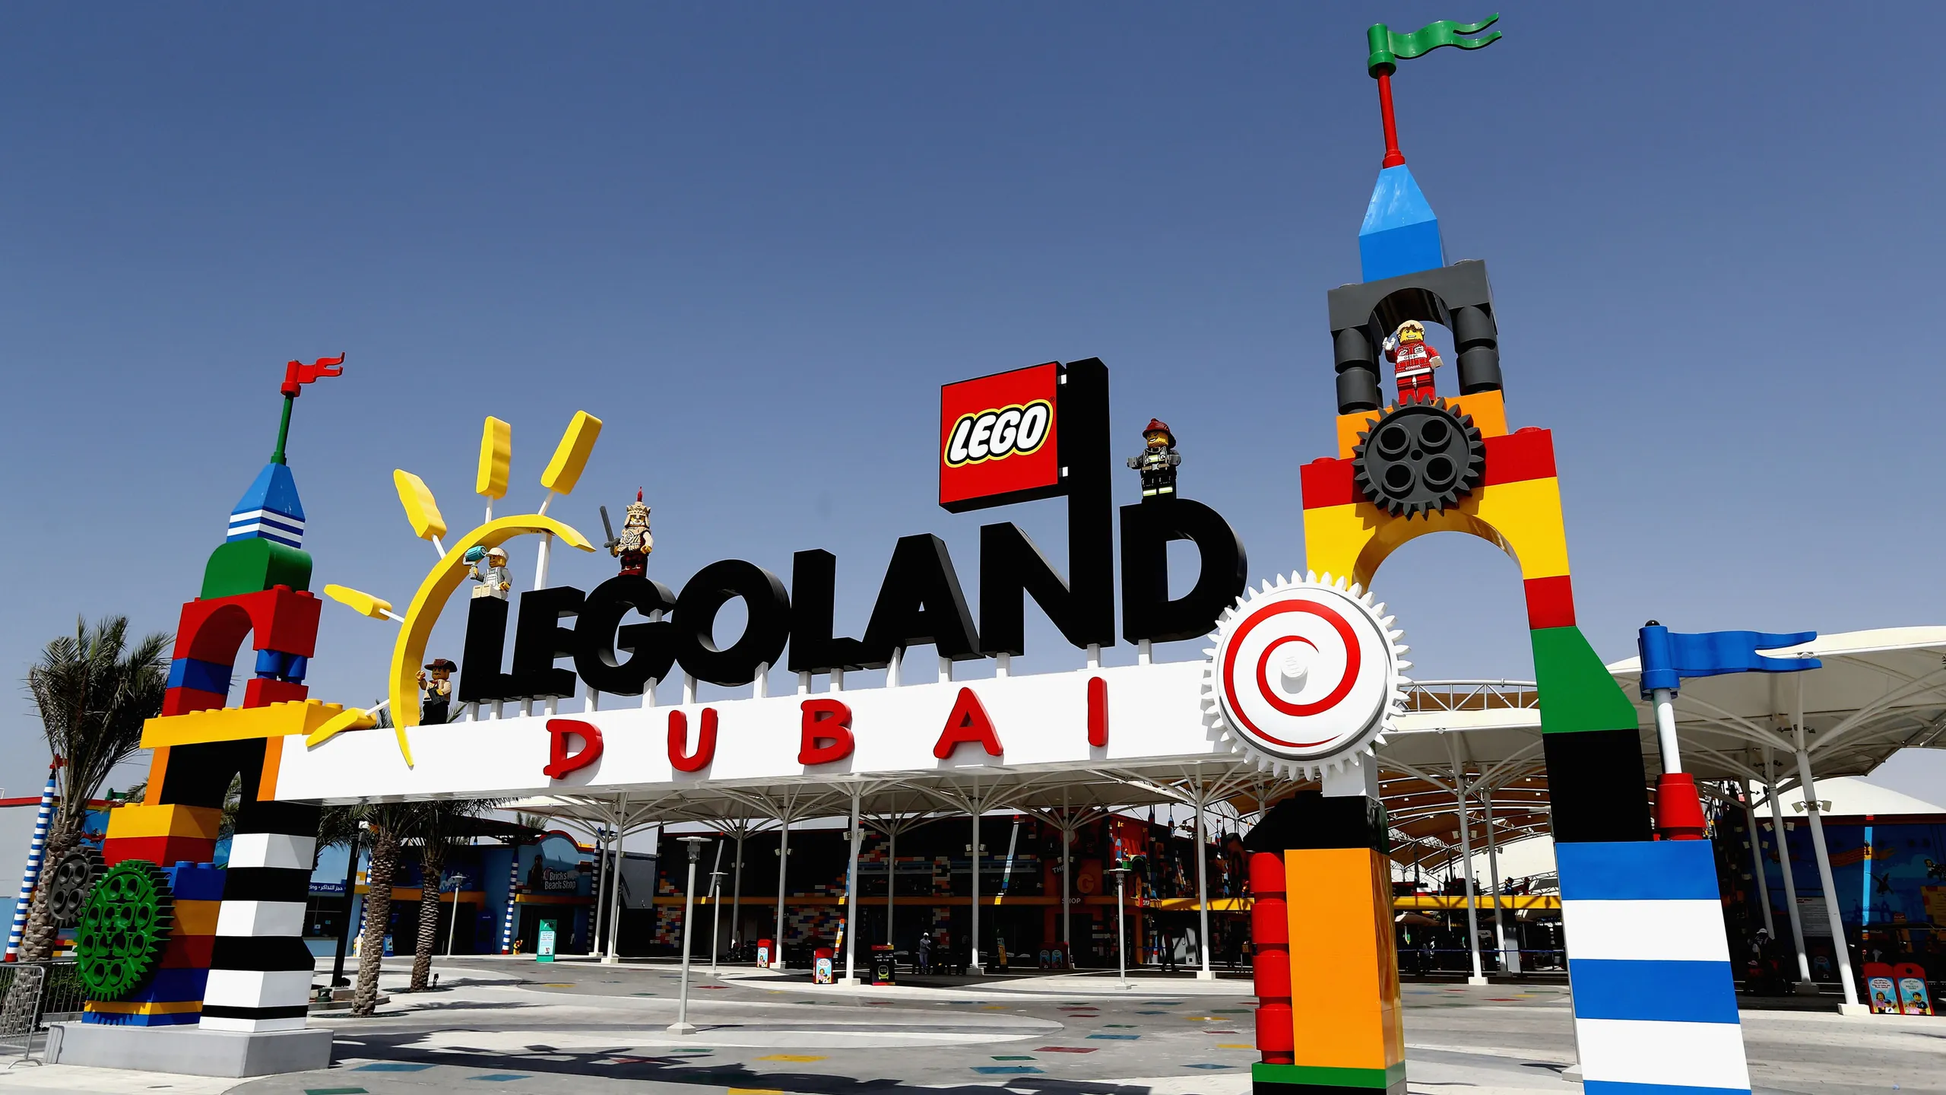  Legoland Dubai Attraction